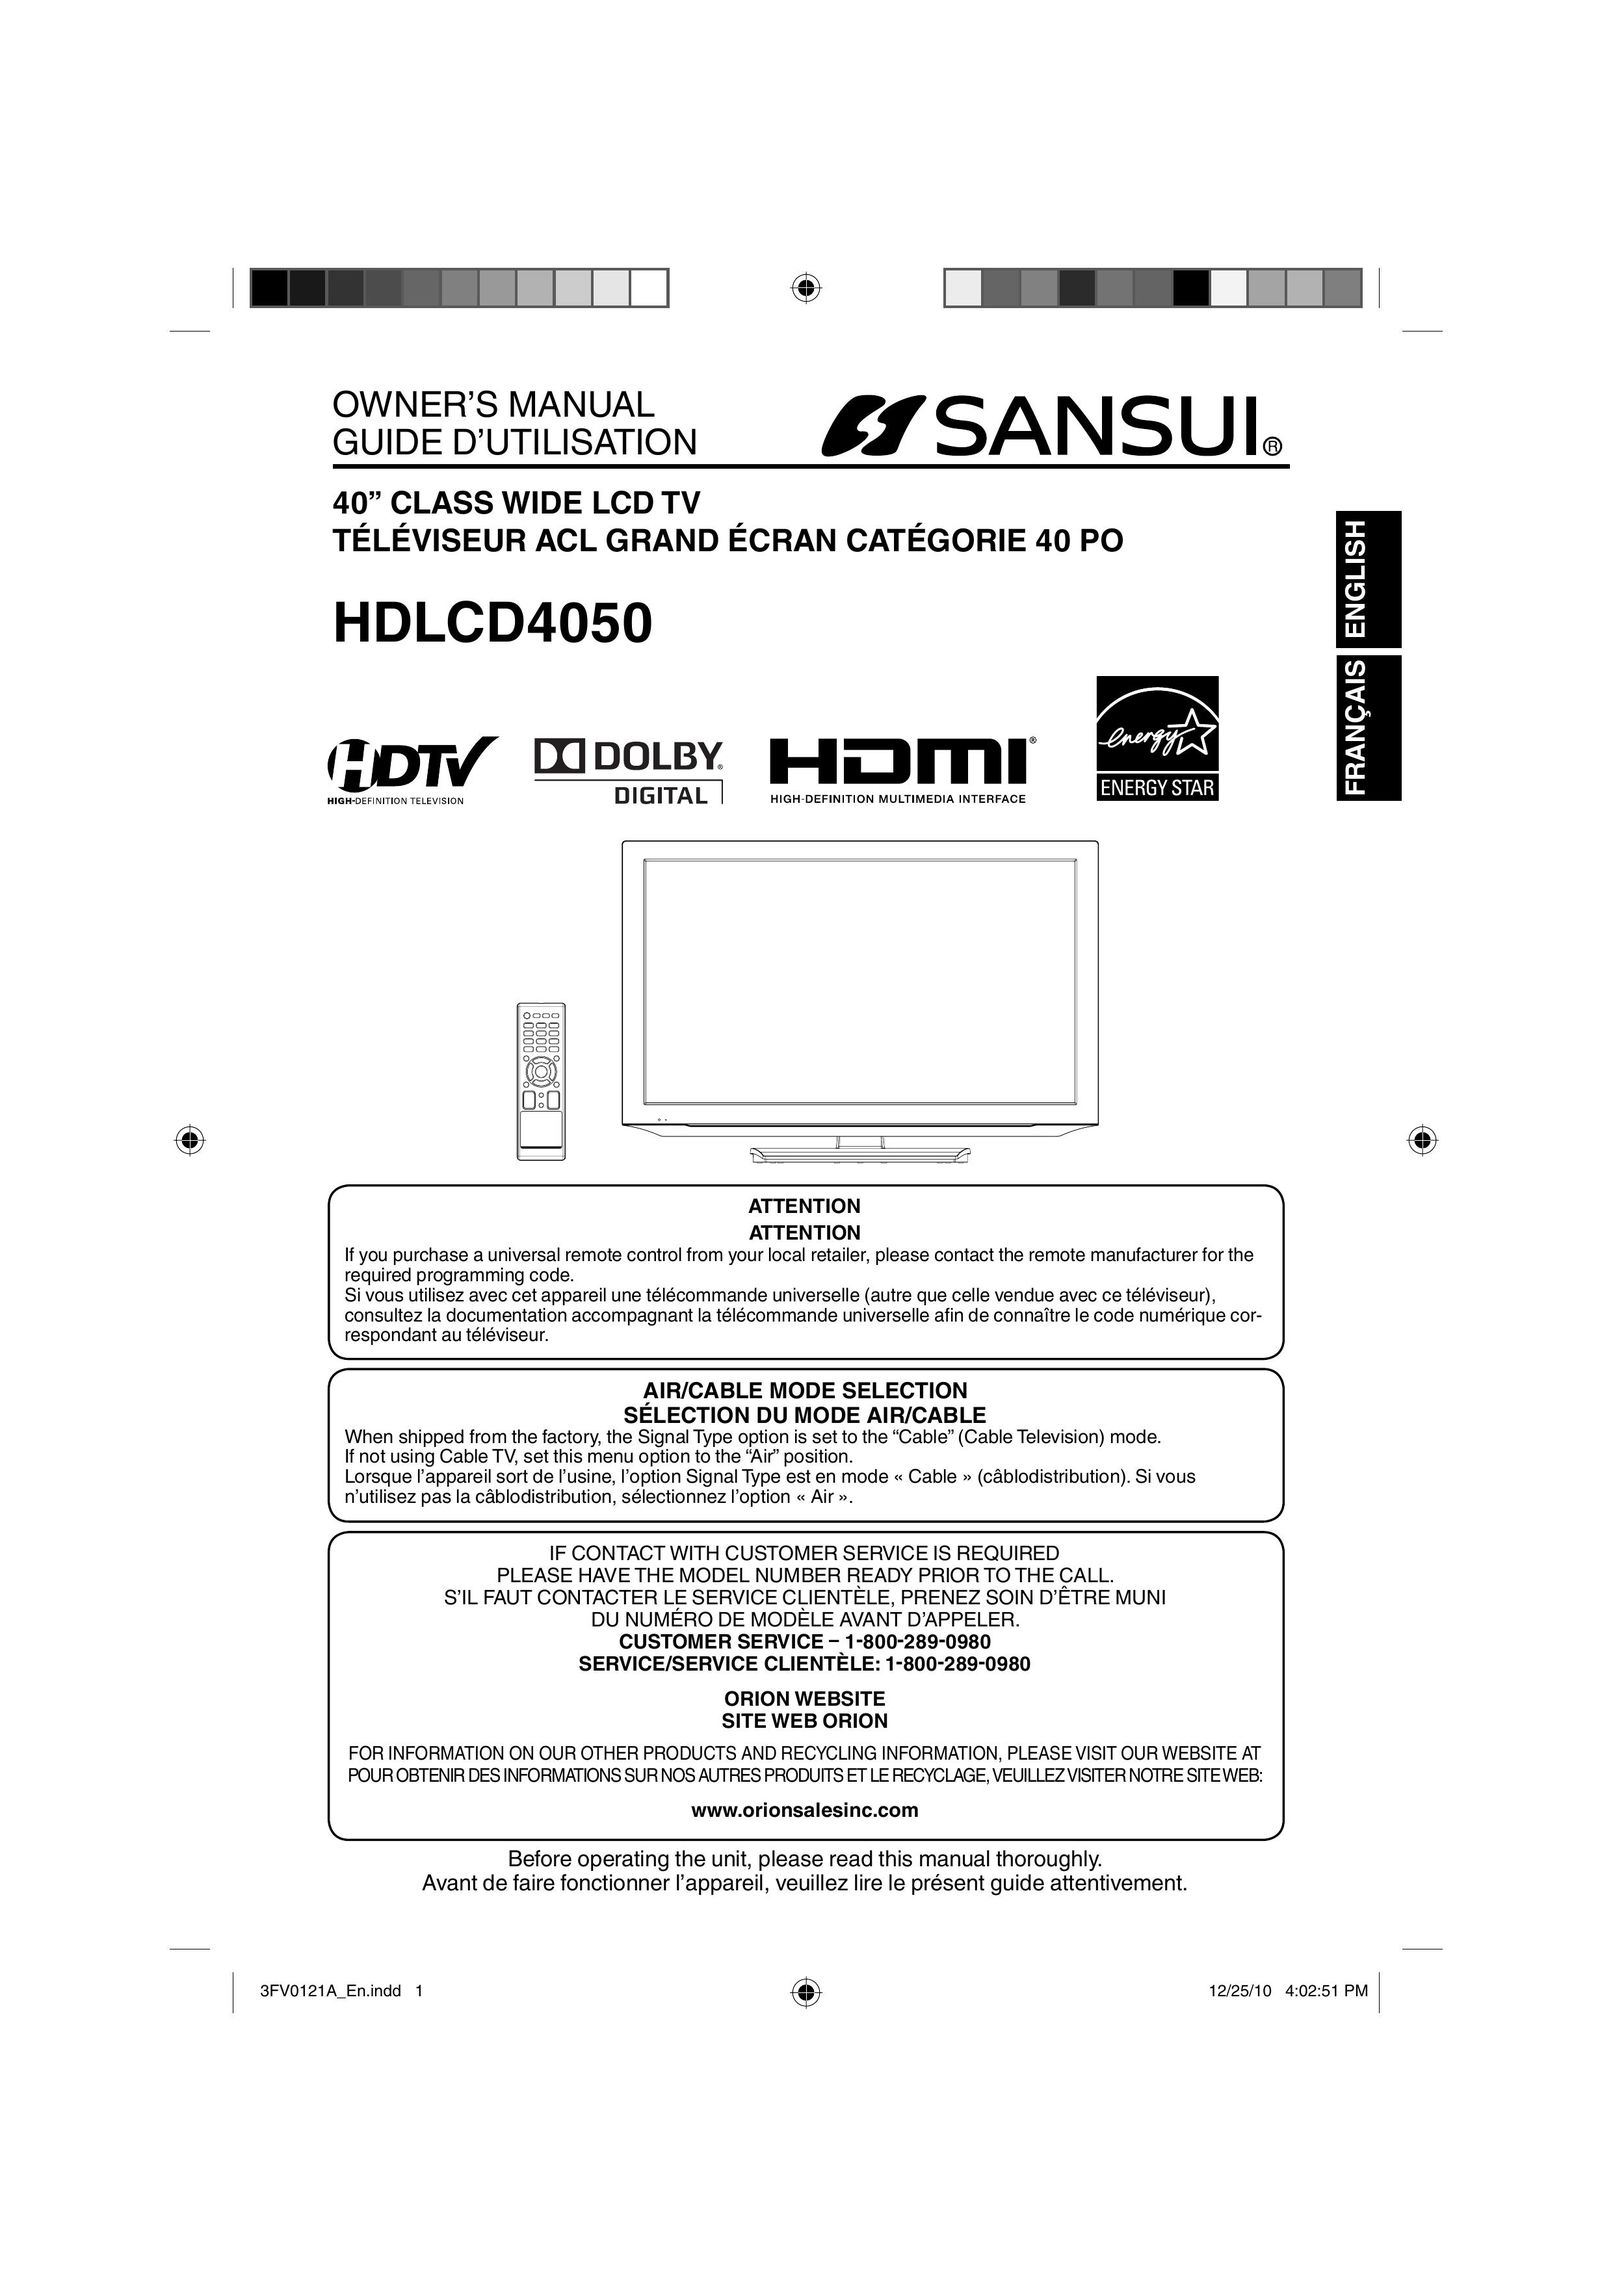 Sansui HDLCD4050 Flat Panel Television User Manual